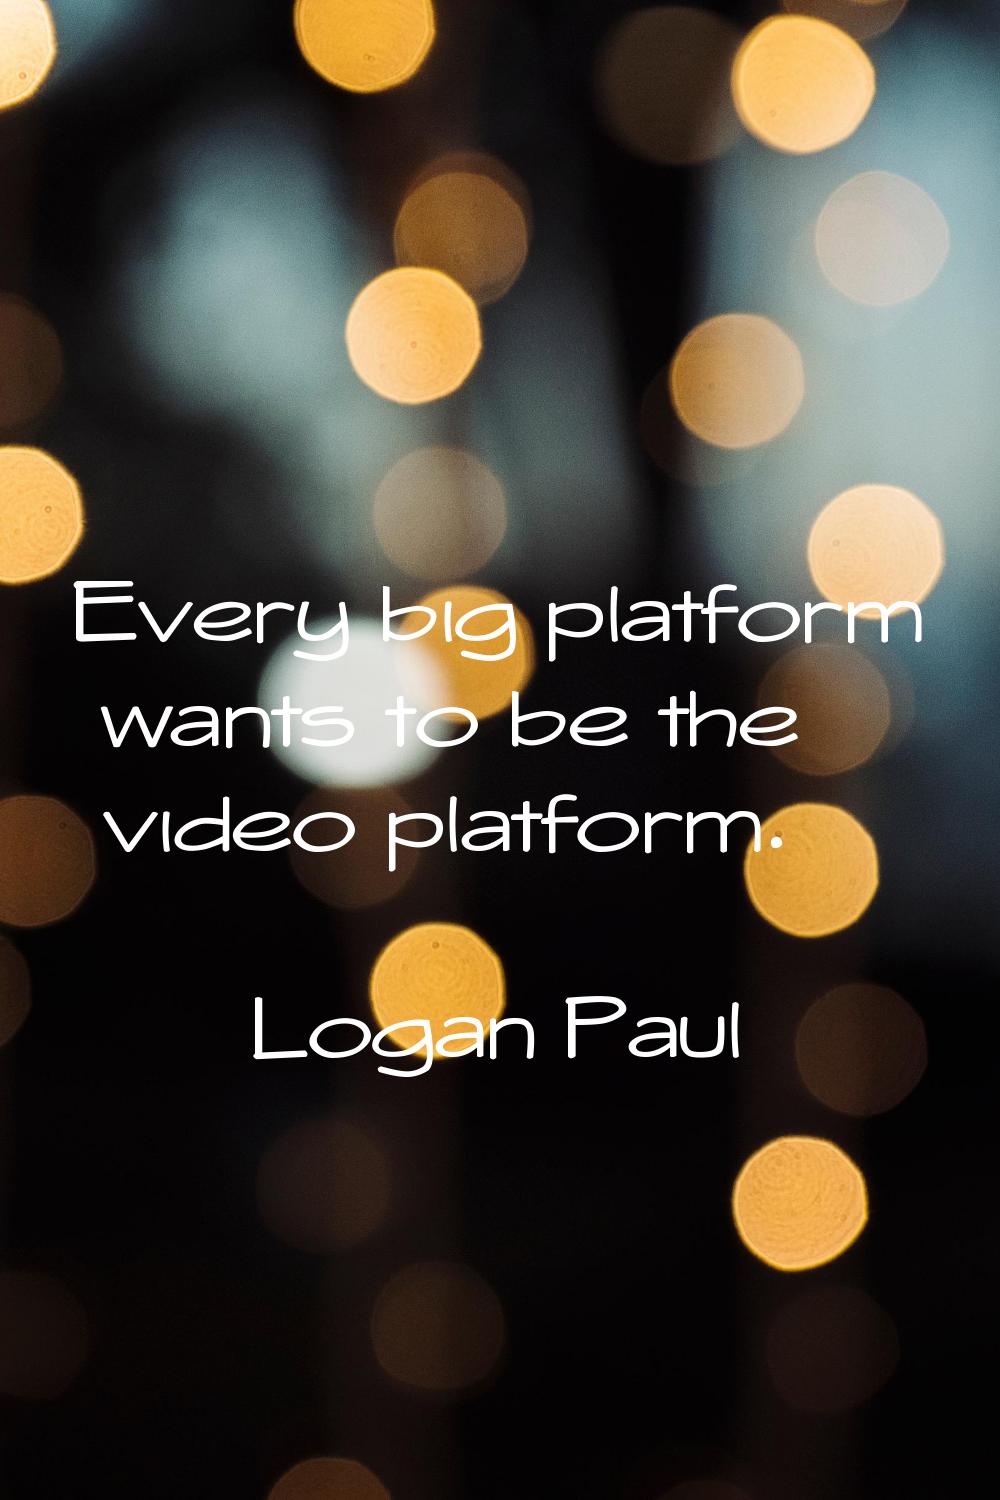 Every big platform wants to be the video platform.